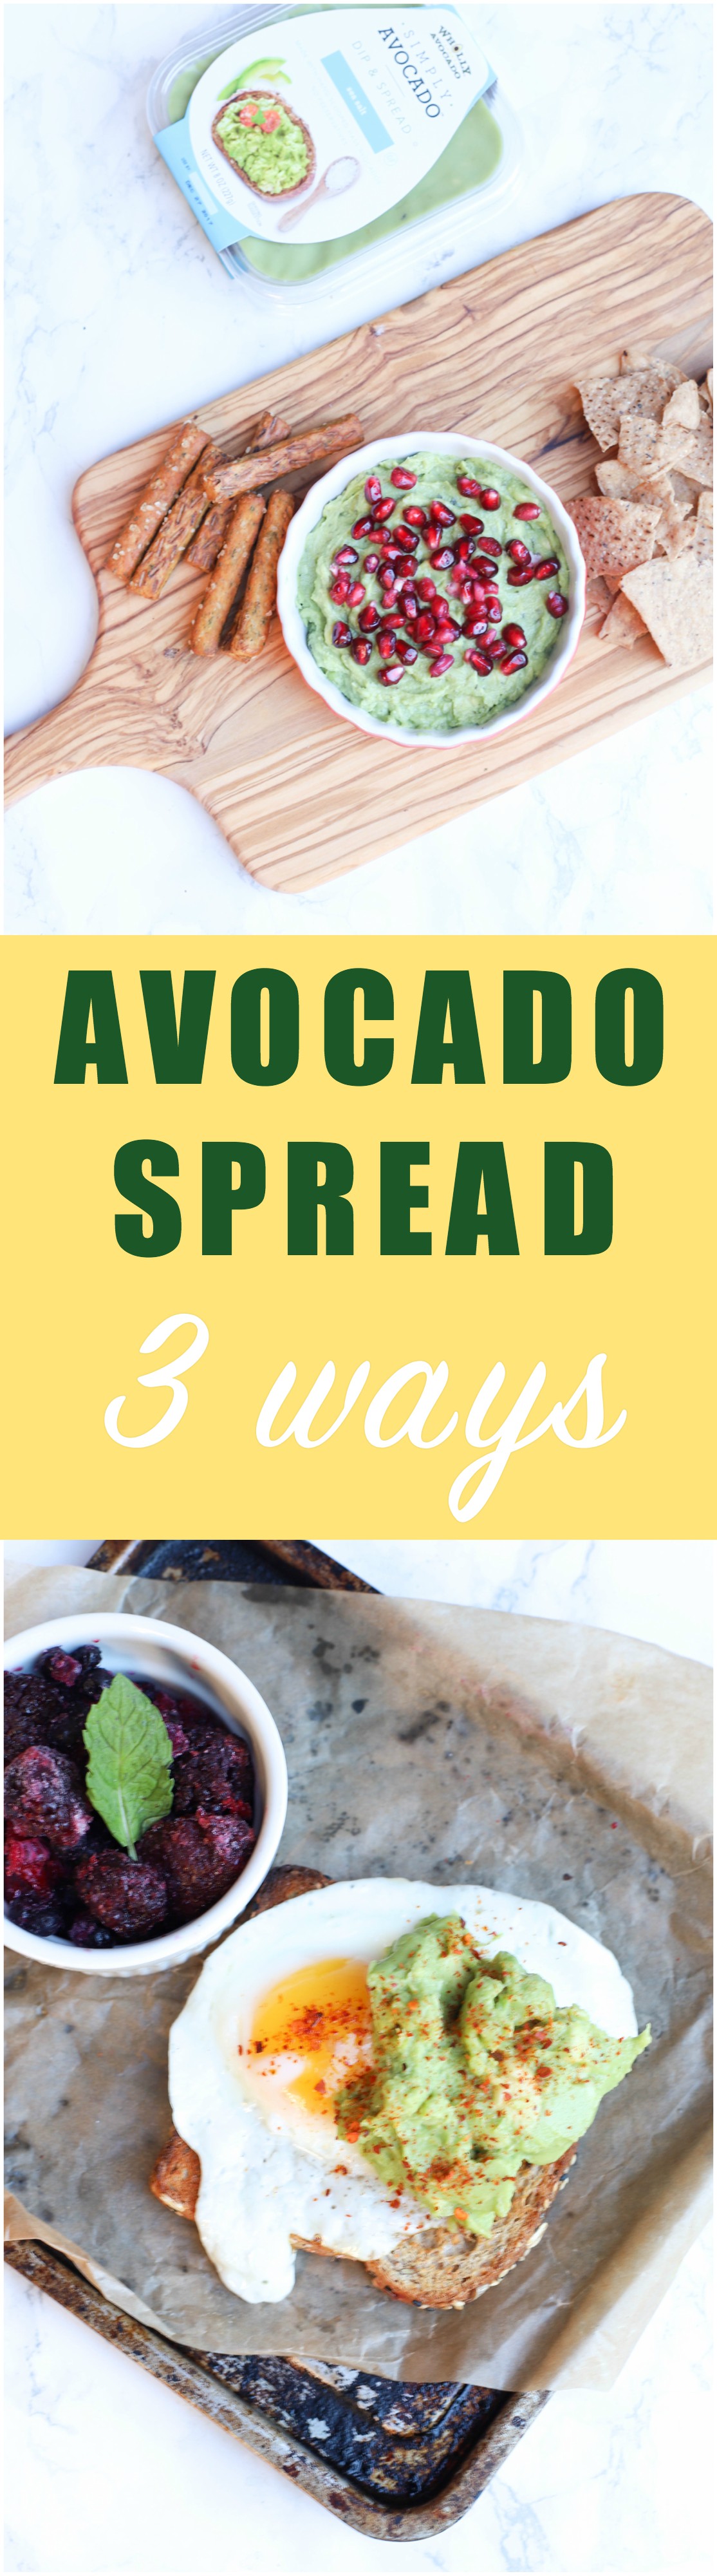 Enjoy Avocado Spread 3 Ways for parties, snacks, and utilizing leftover.